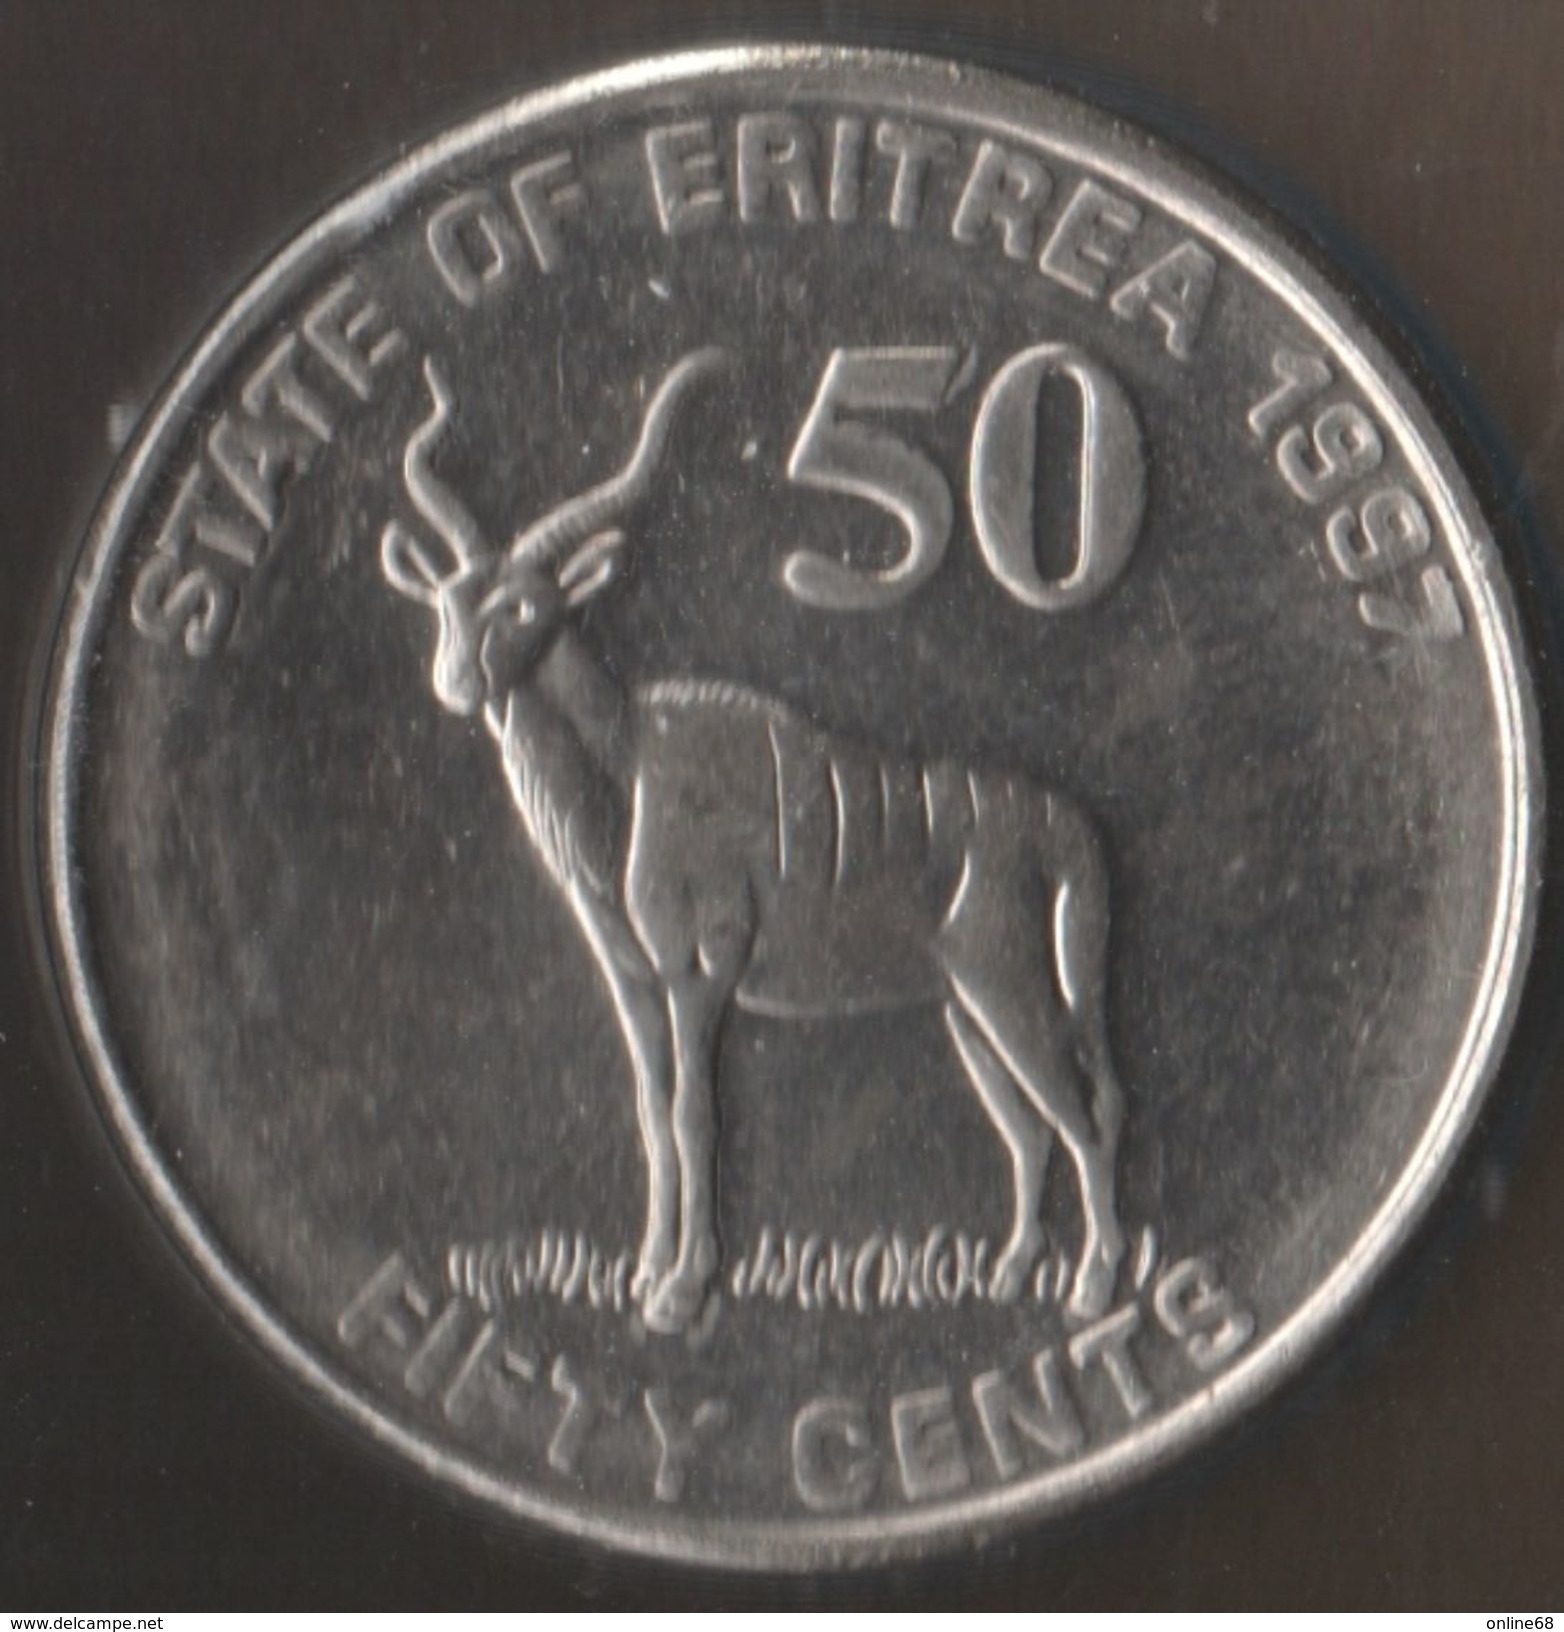 ERITREA 50 CENTS 1997 KM# 47 ANIMAL Antelope - Greater Kudu - Erythrée